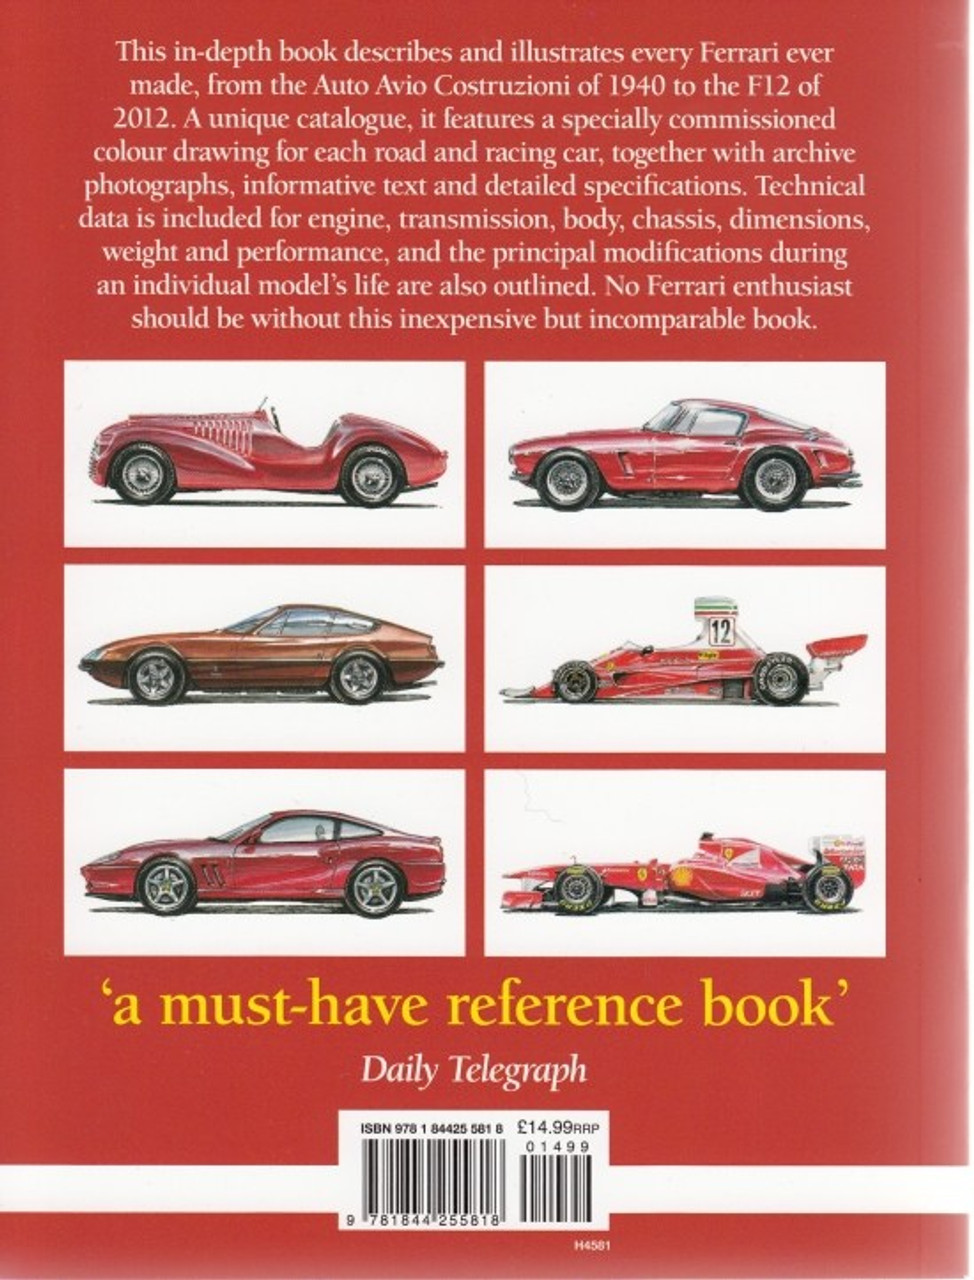 Ferrari All The Cars: Every Ferrari Ever Made Described & Illustrated (2nd Editi